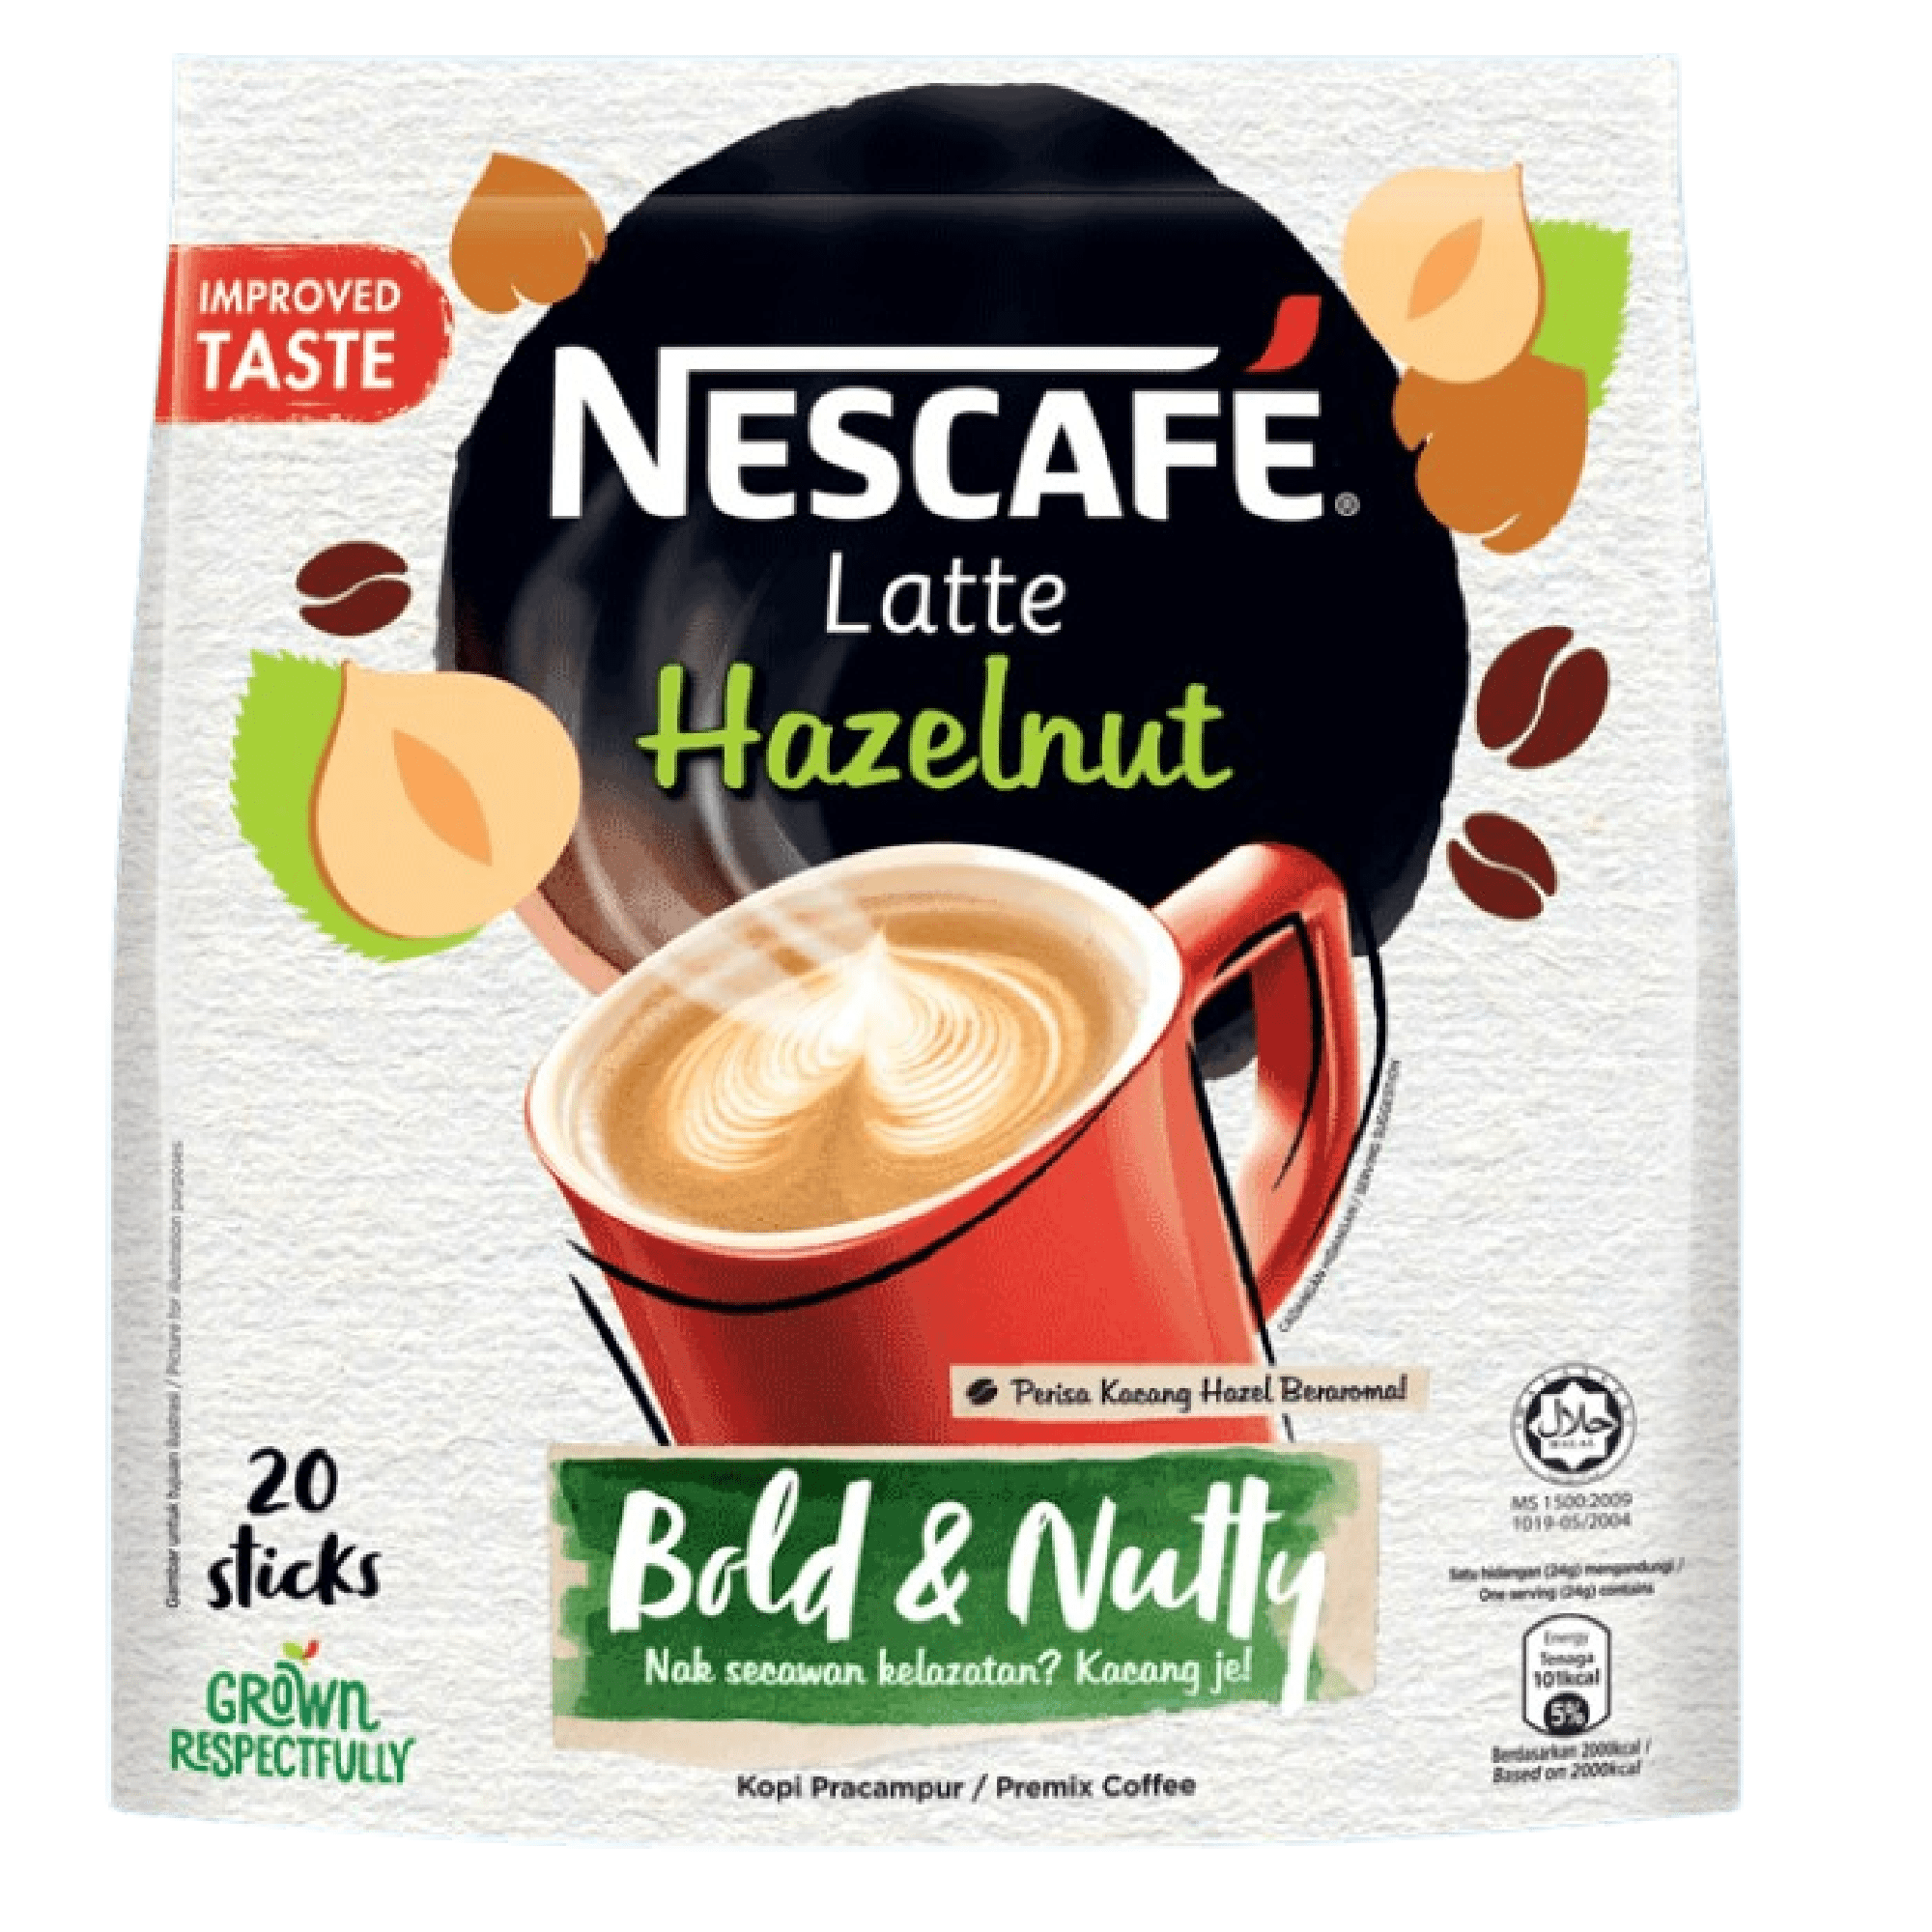 NESCAFE 3 in 1 Classic Ice Coffee Mix 20g